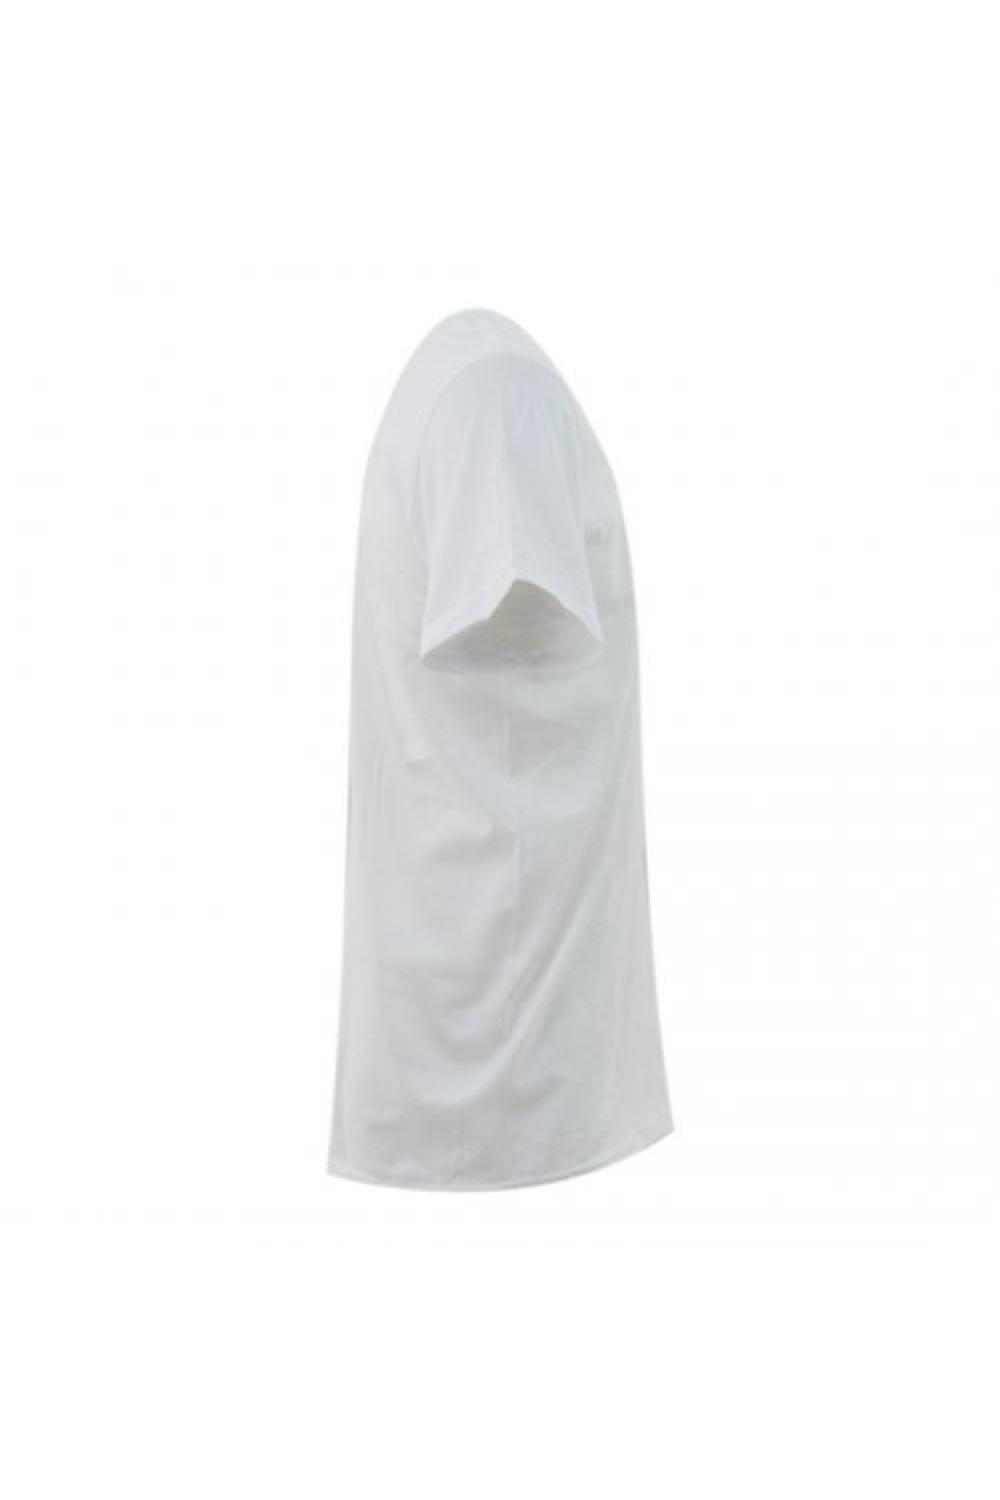 RIPNDIP T-shirt Lord Nermal Pocket Unisex - White (RND0205)